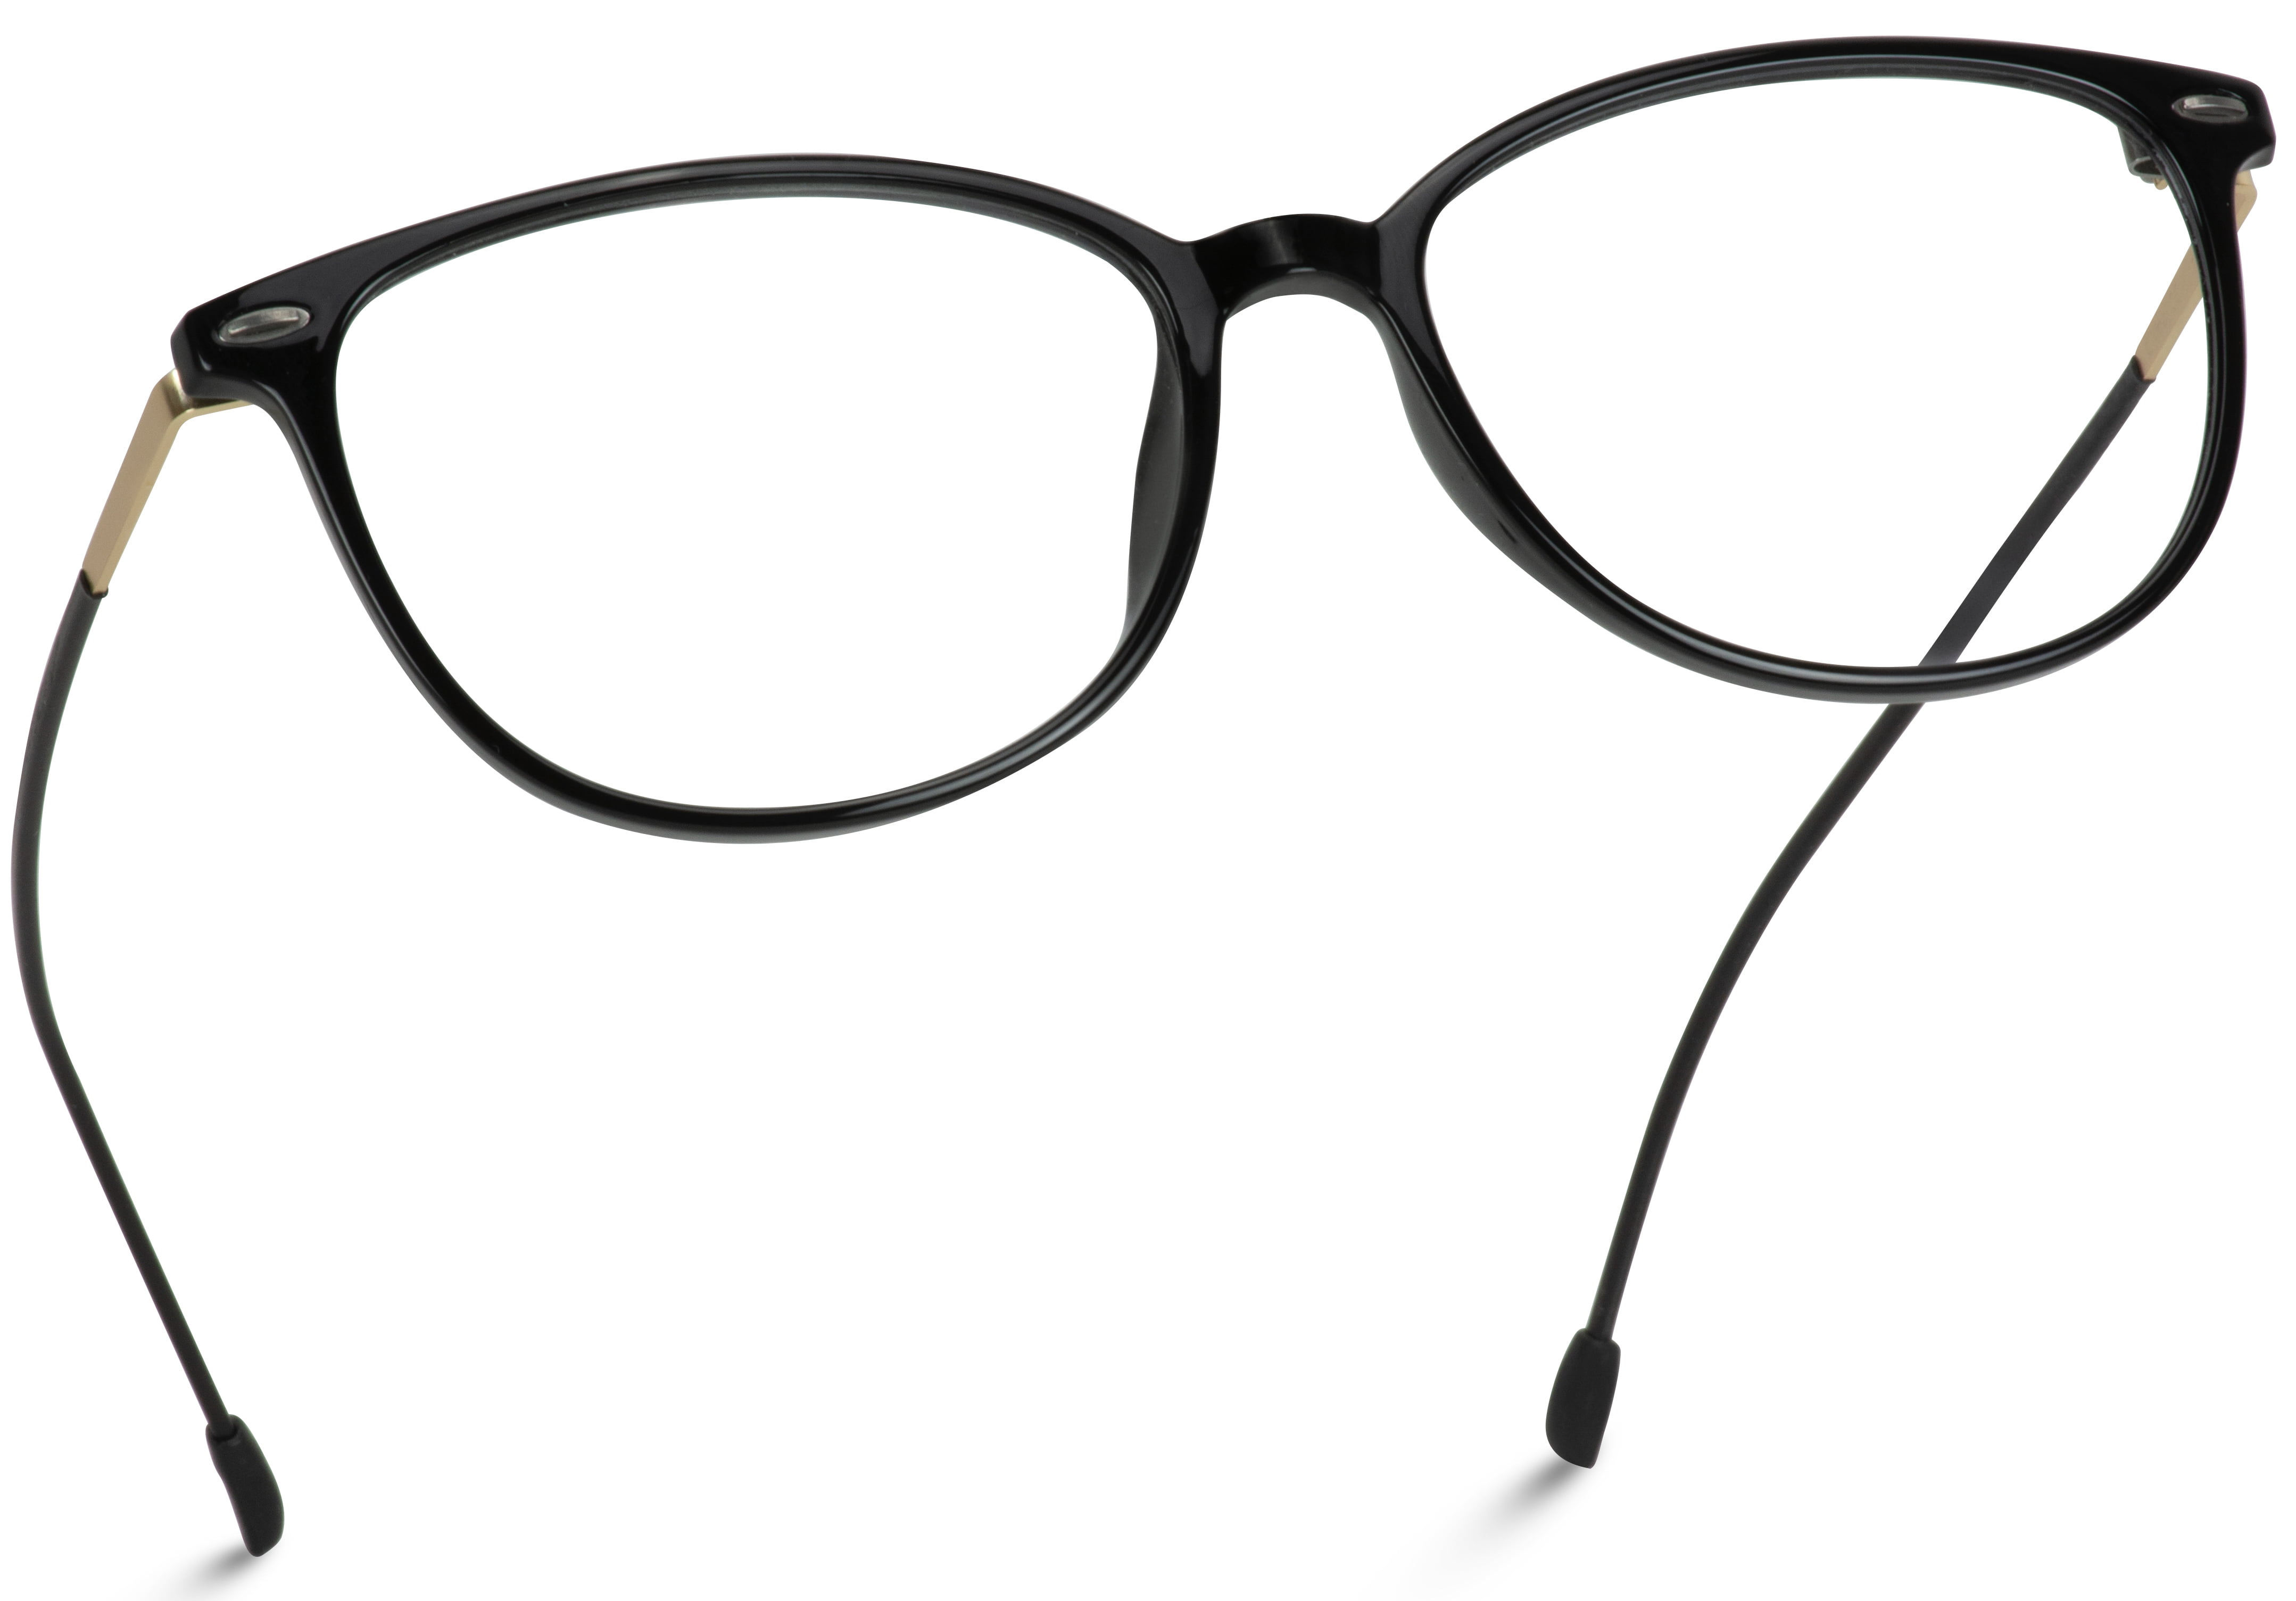 Black Anti Blue Light Glasses Frame Ultralight Metal Round Optical Sepectacles Men Women Computer Goggles Eyeglasses Eyewear Golden Store US Updated Technology,